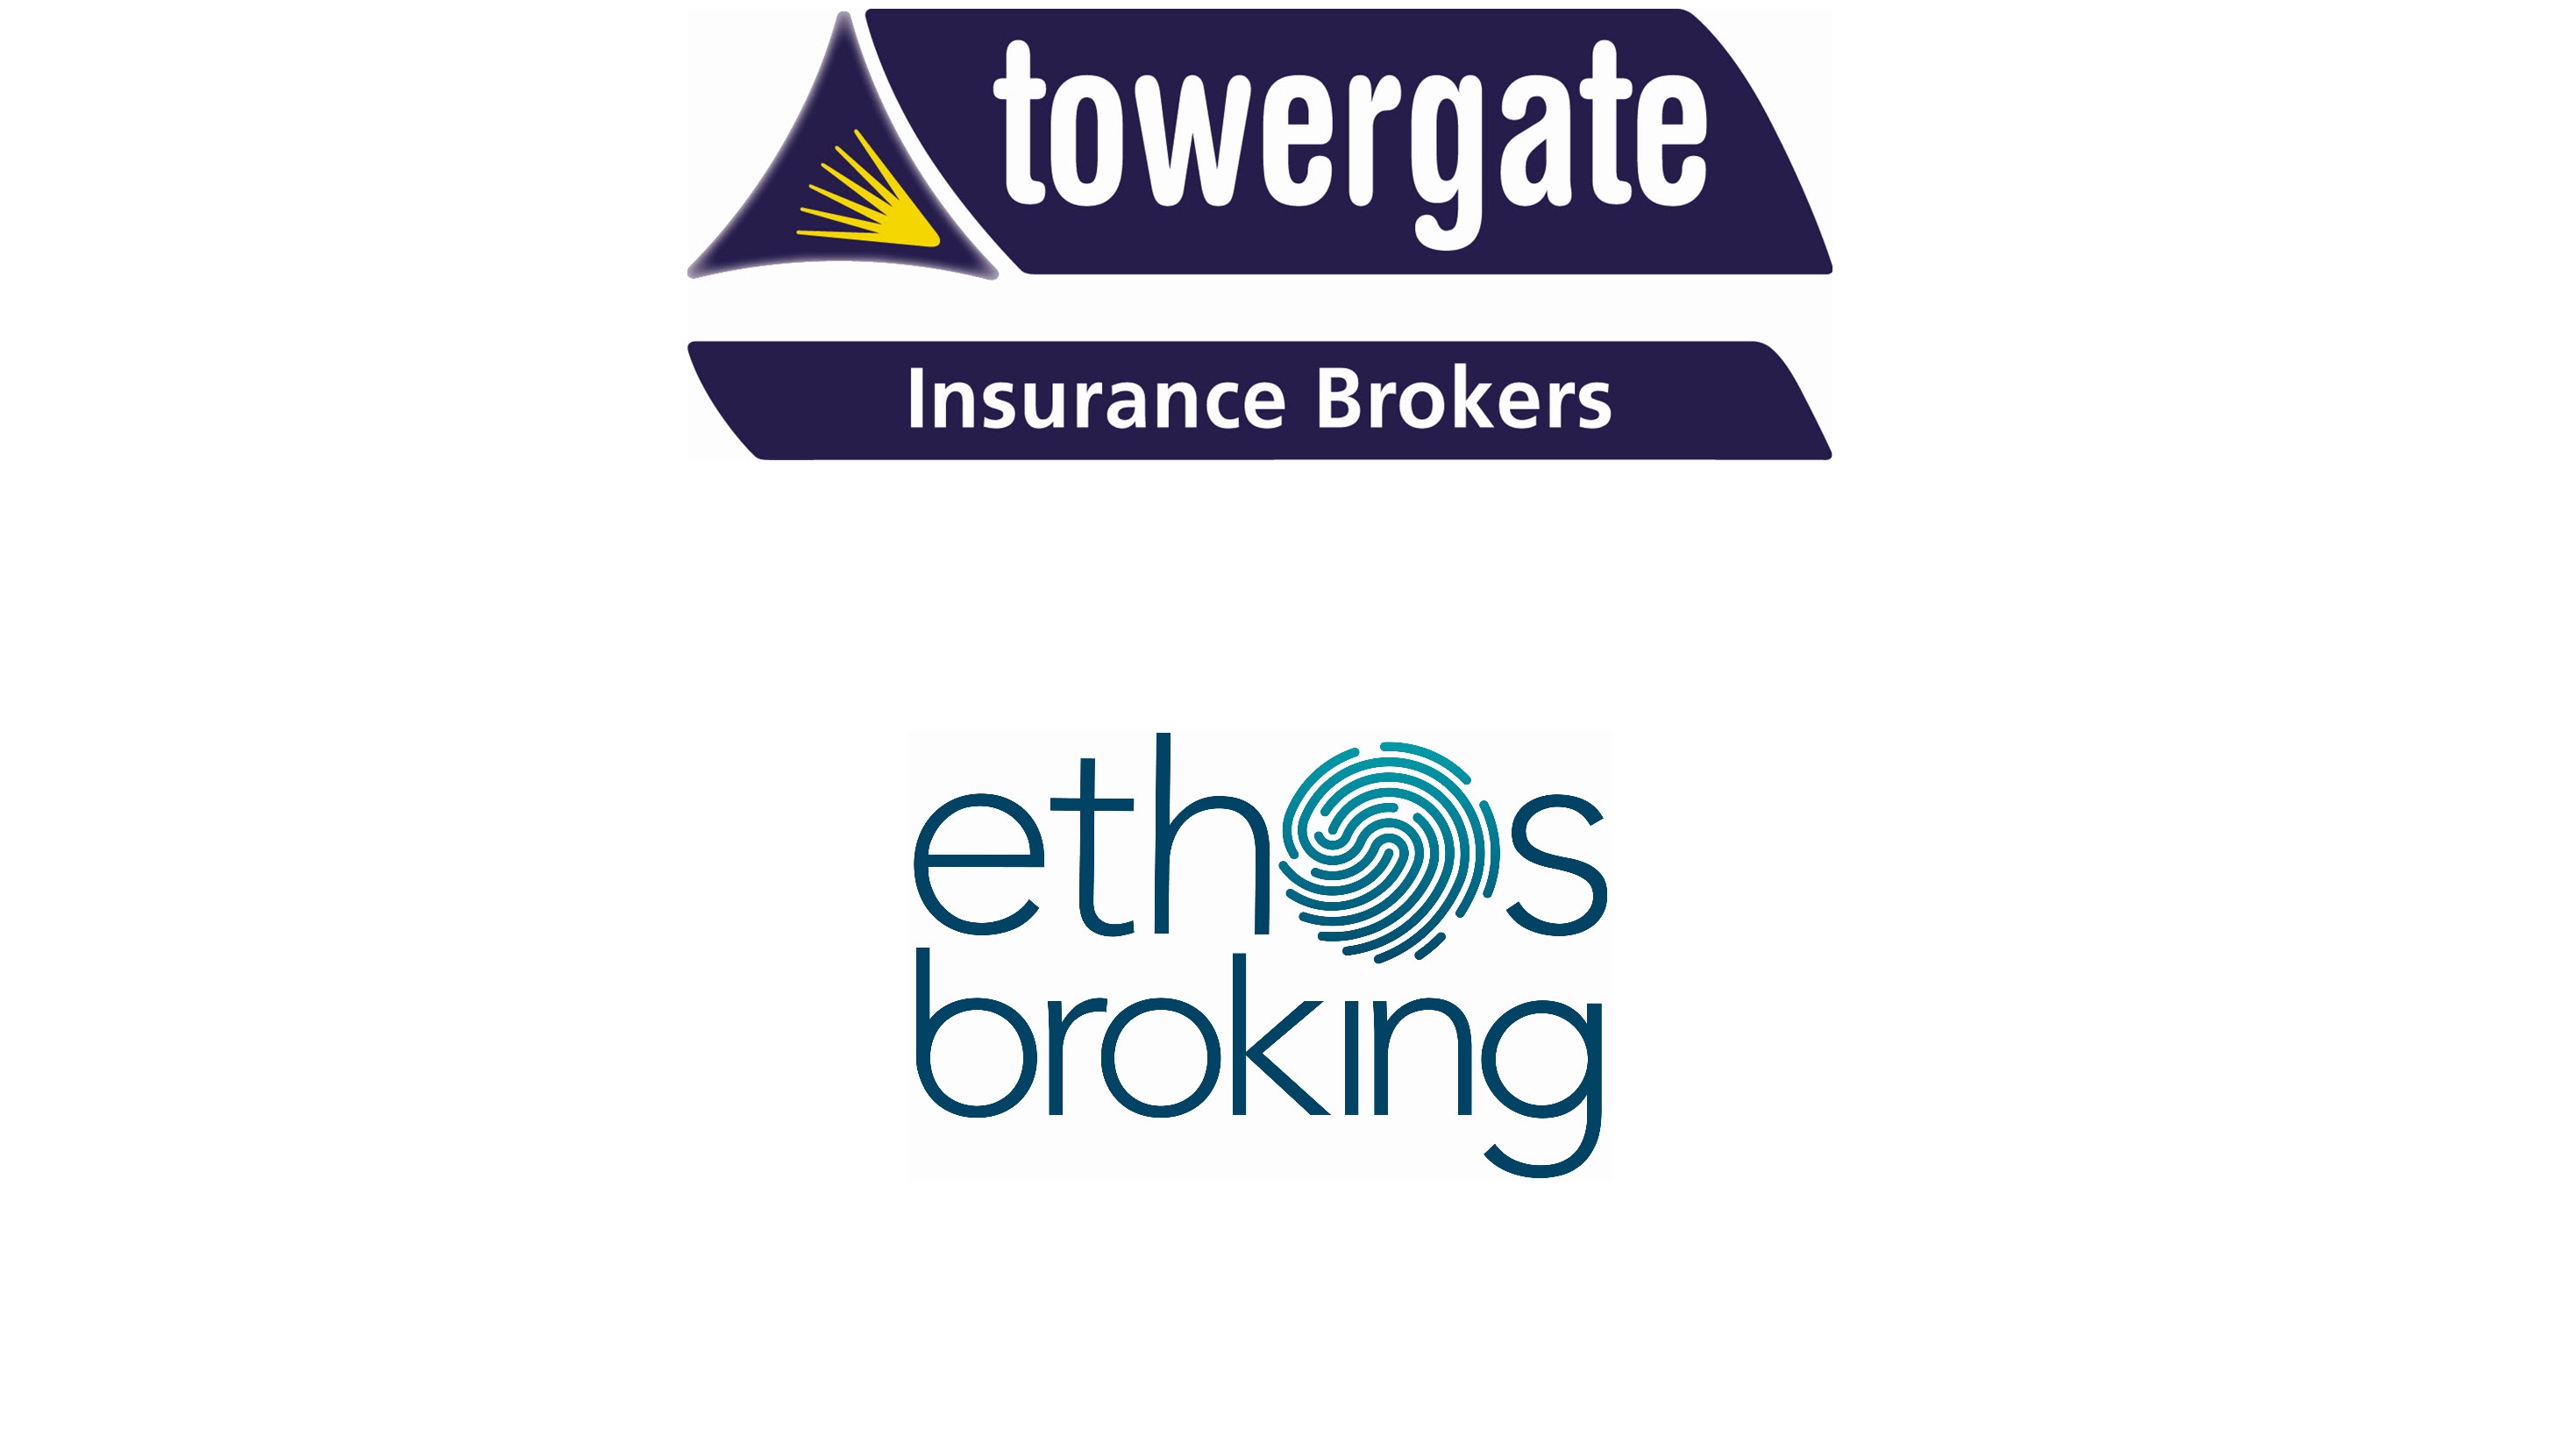 HSB | Towergate & Ethos Broking